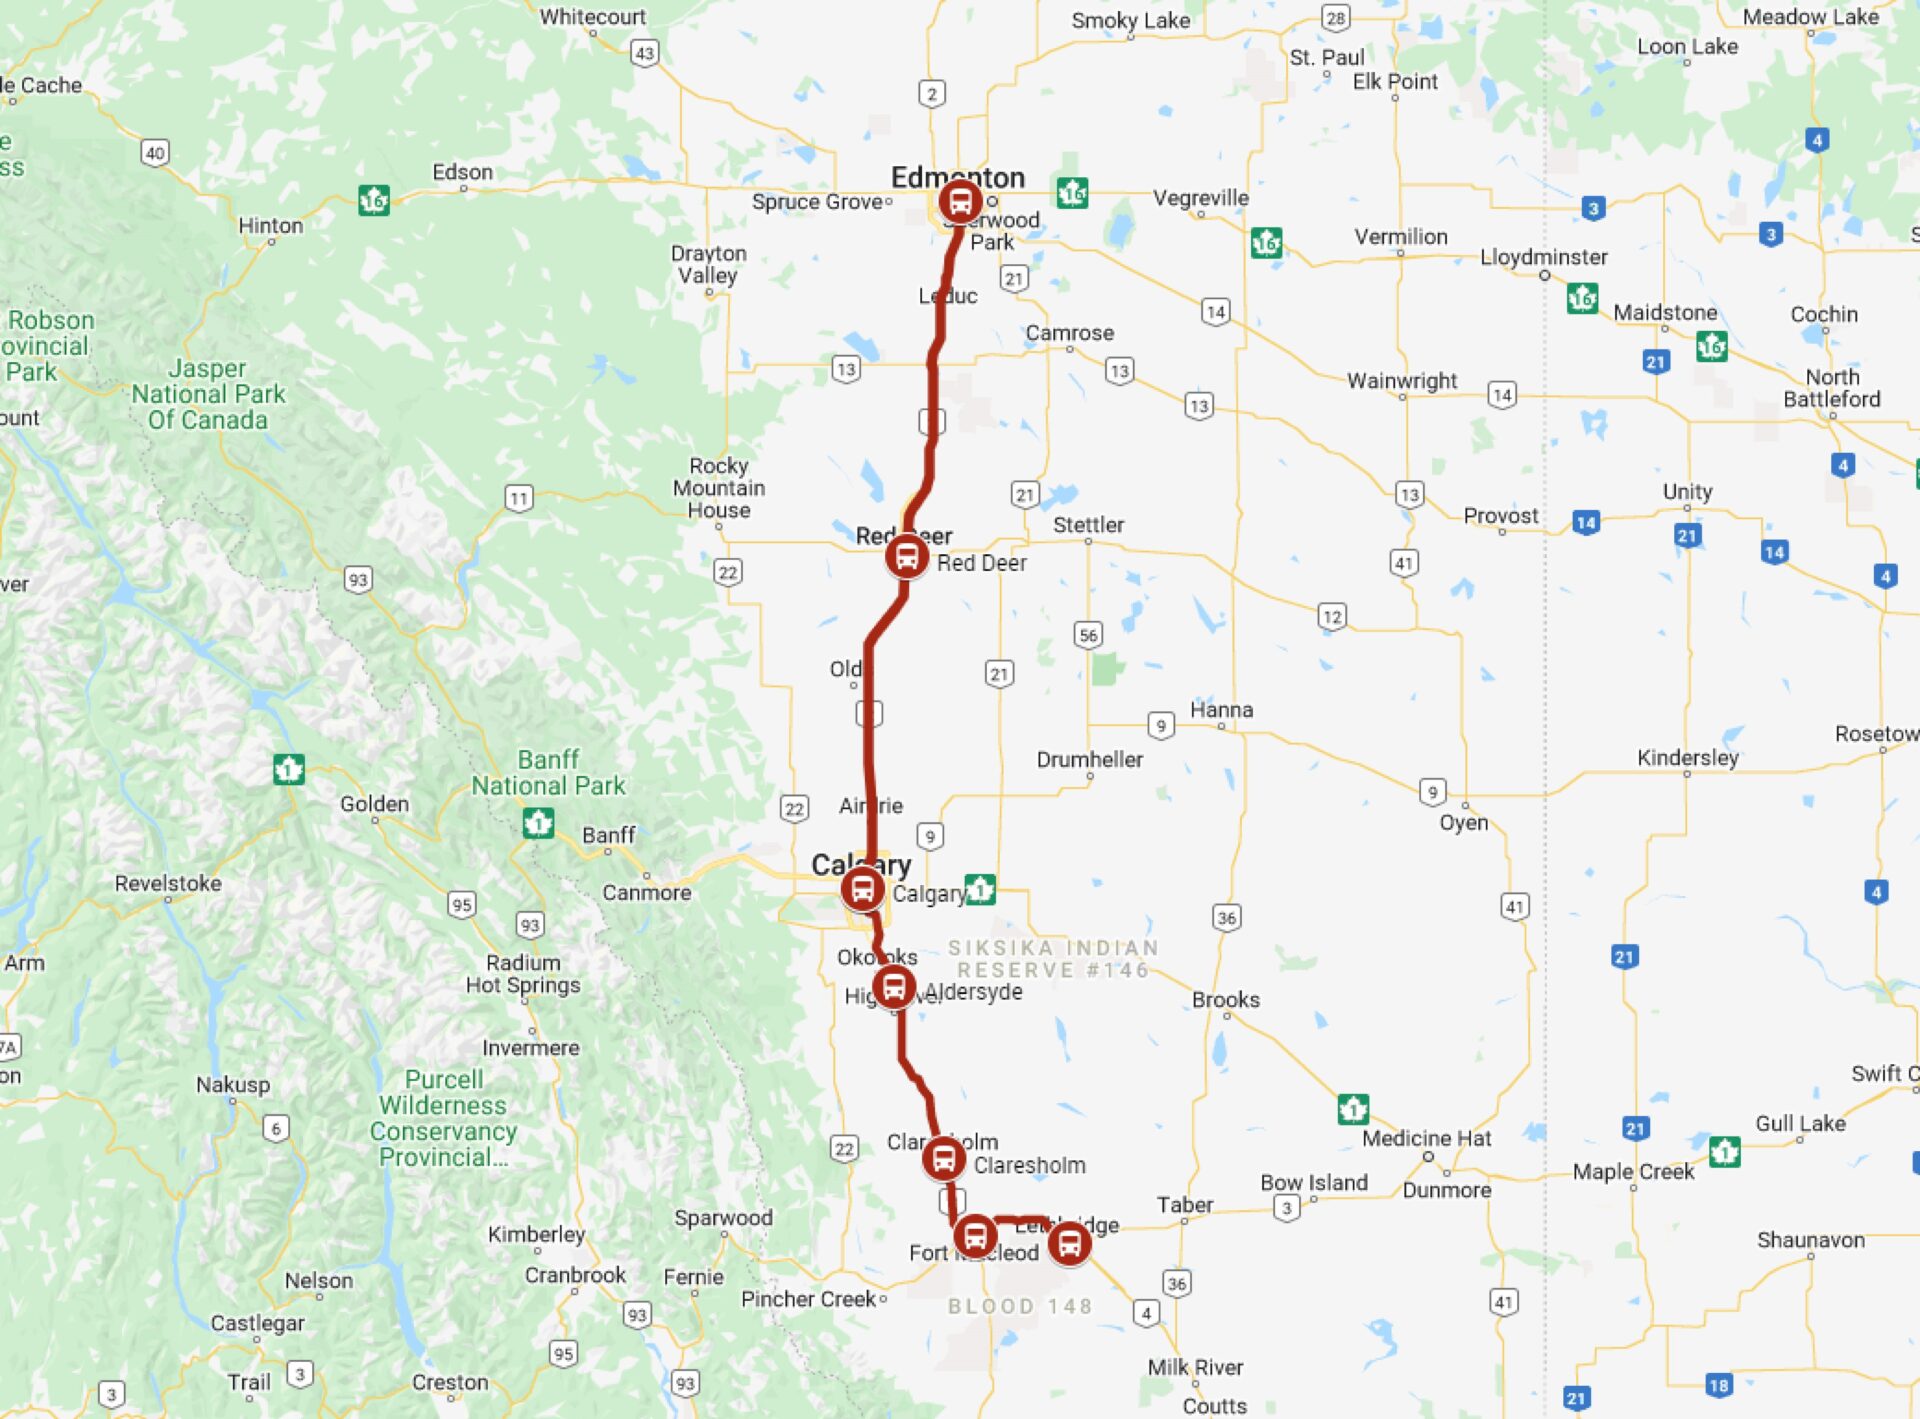 Lethbridge to Edmonton - Red Arrow